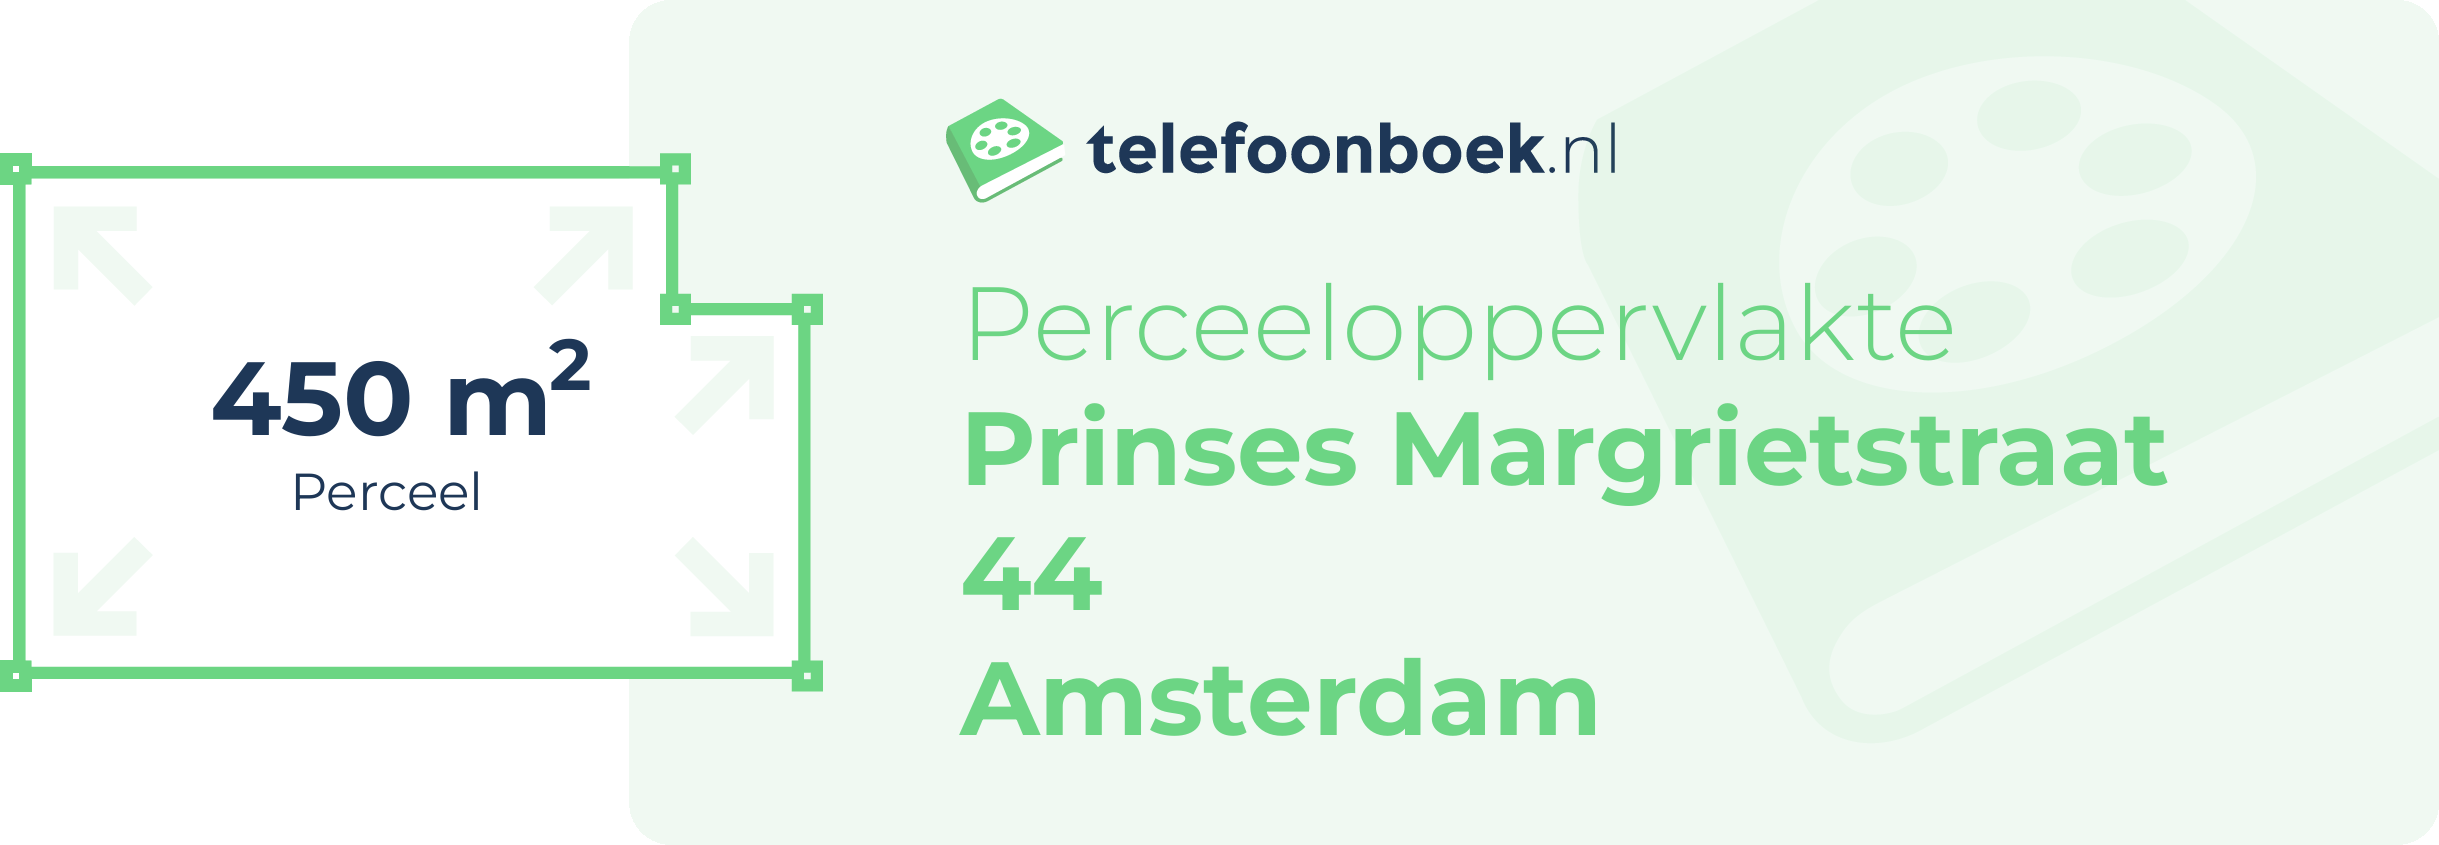 Perceeloppervlakte Prinses Margrietstraat 44 Amsterdam